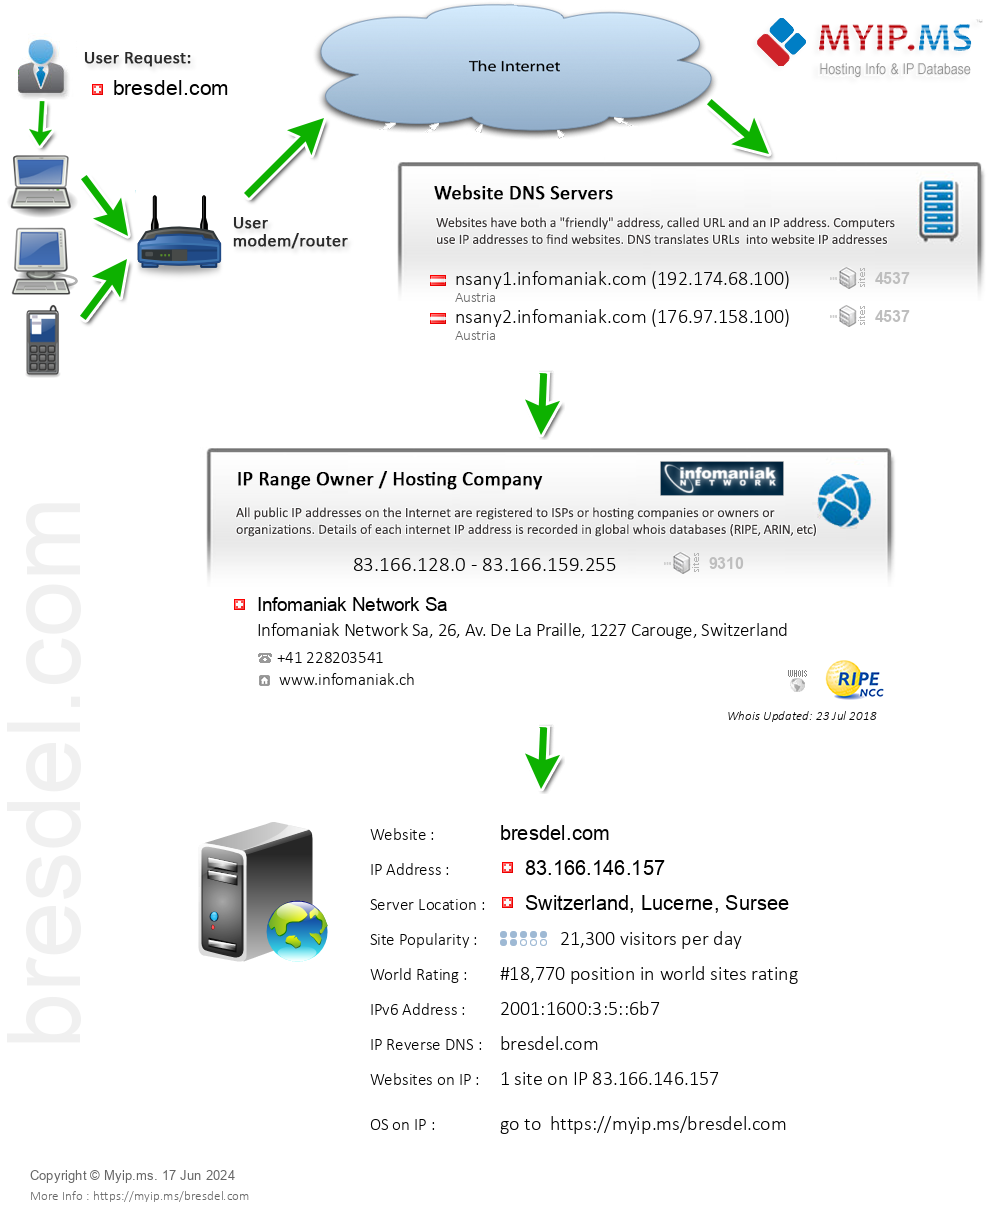 Bresdel.com - Website Hosting Visual IP Diagram